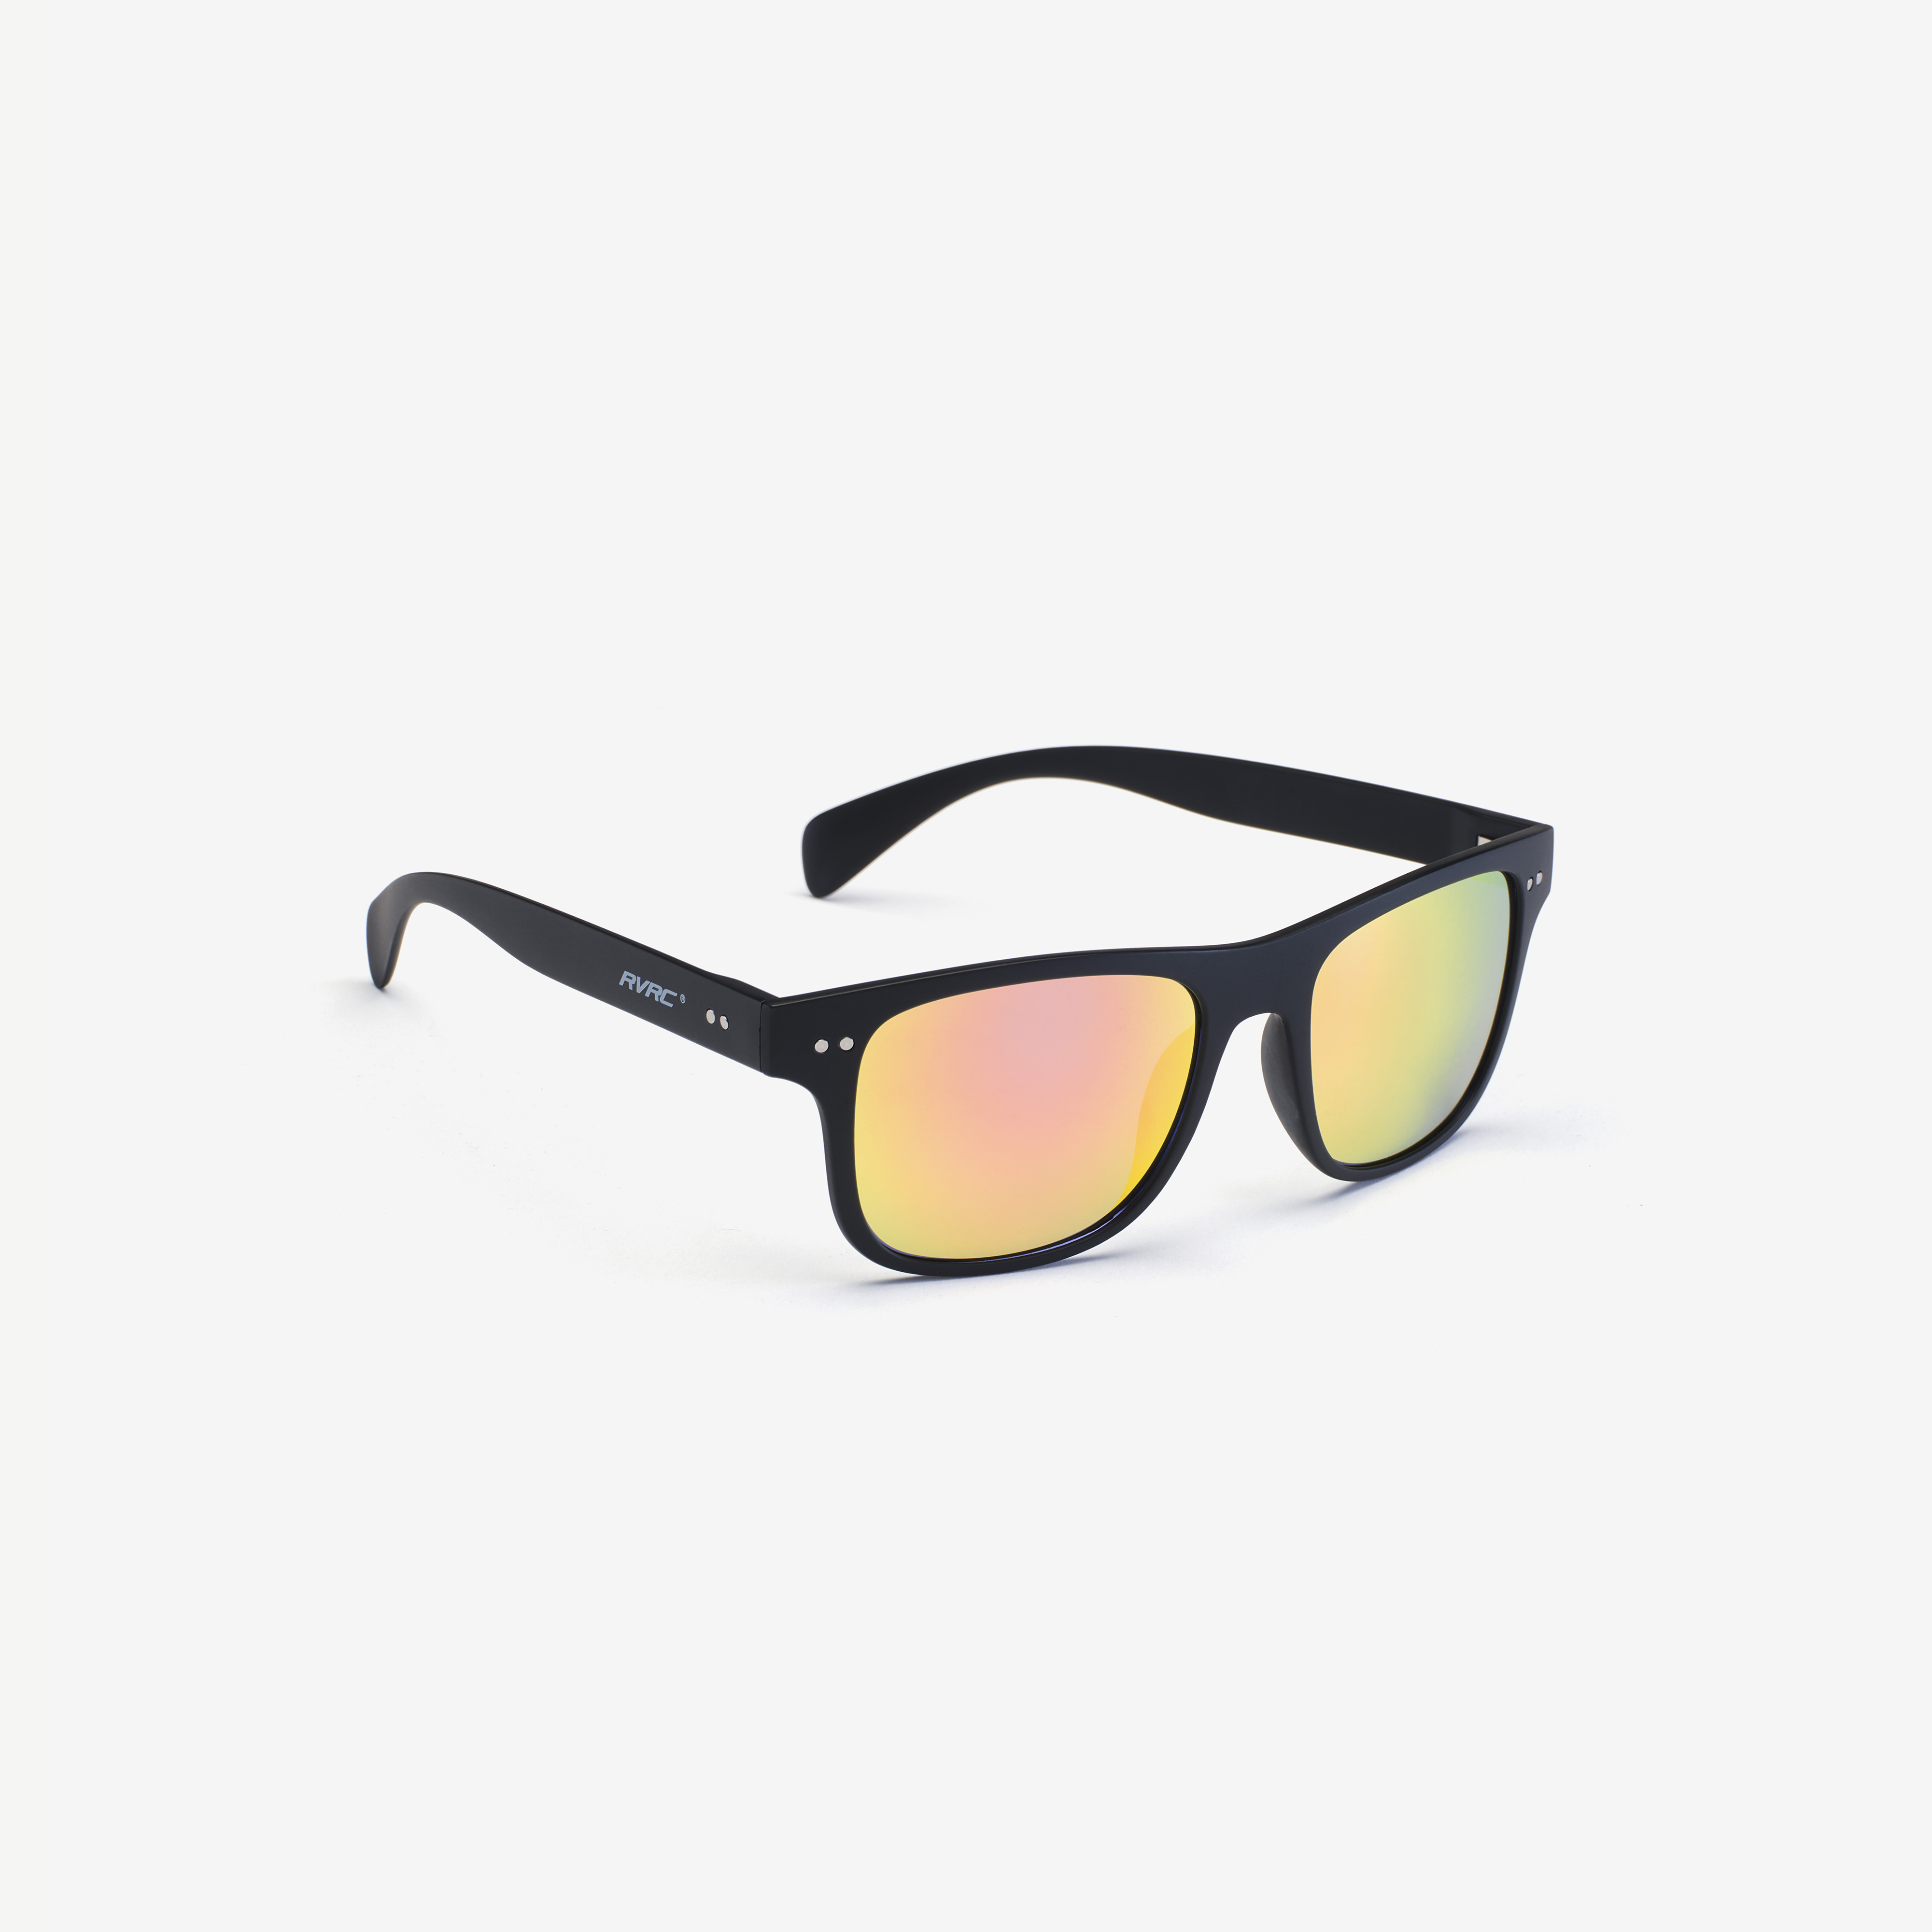 Orion Polarized Sunglasses Black/Cherry Pink